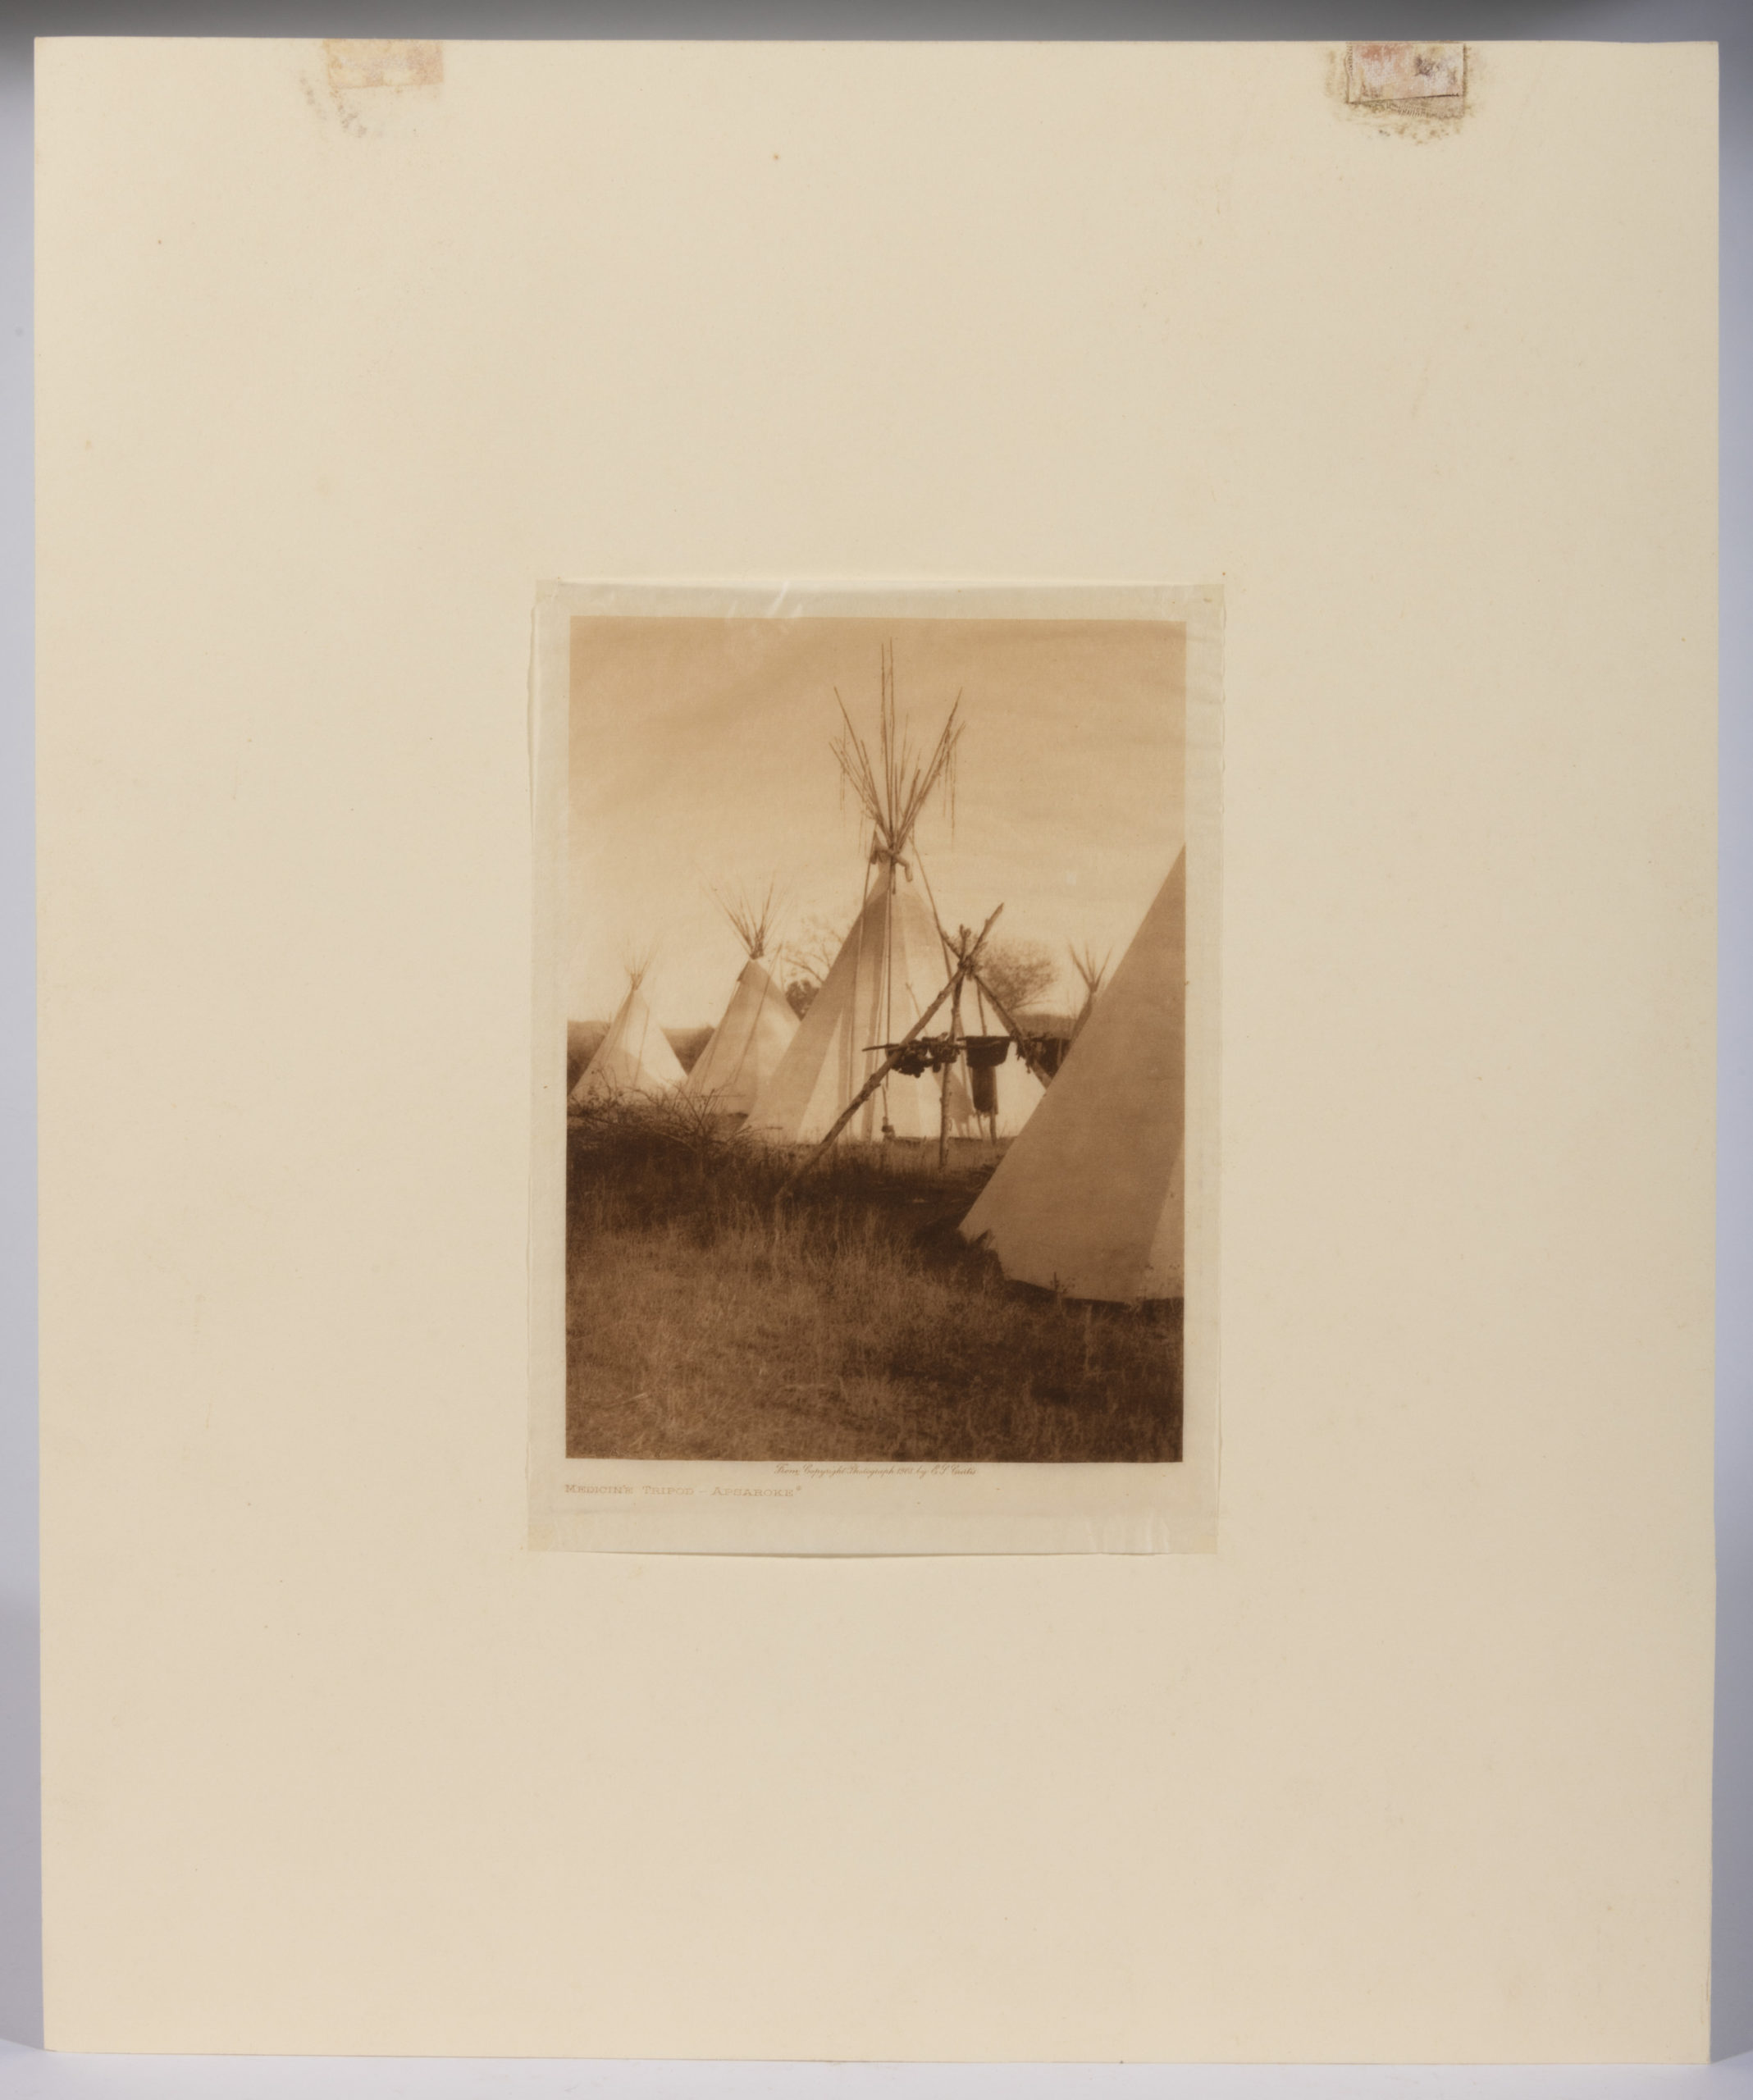 EDWARD CURTIS (AMERICAN, 1868-1952) NATIVE AMERICAN PHOTOGRAVURE,